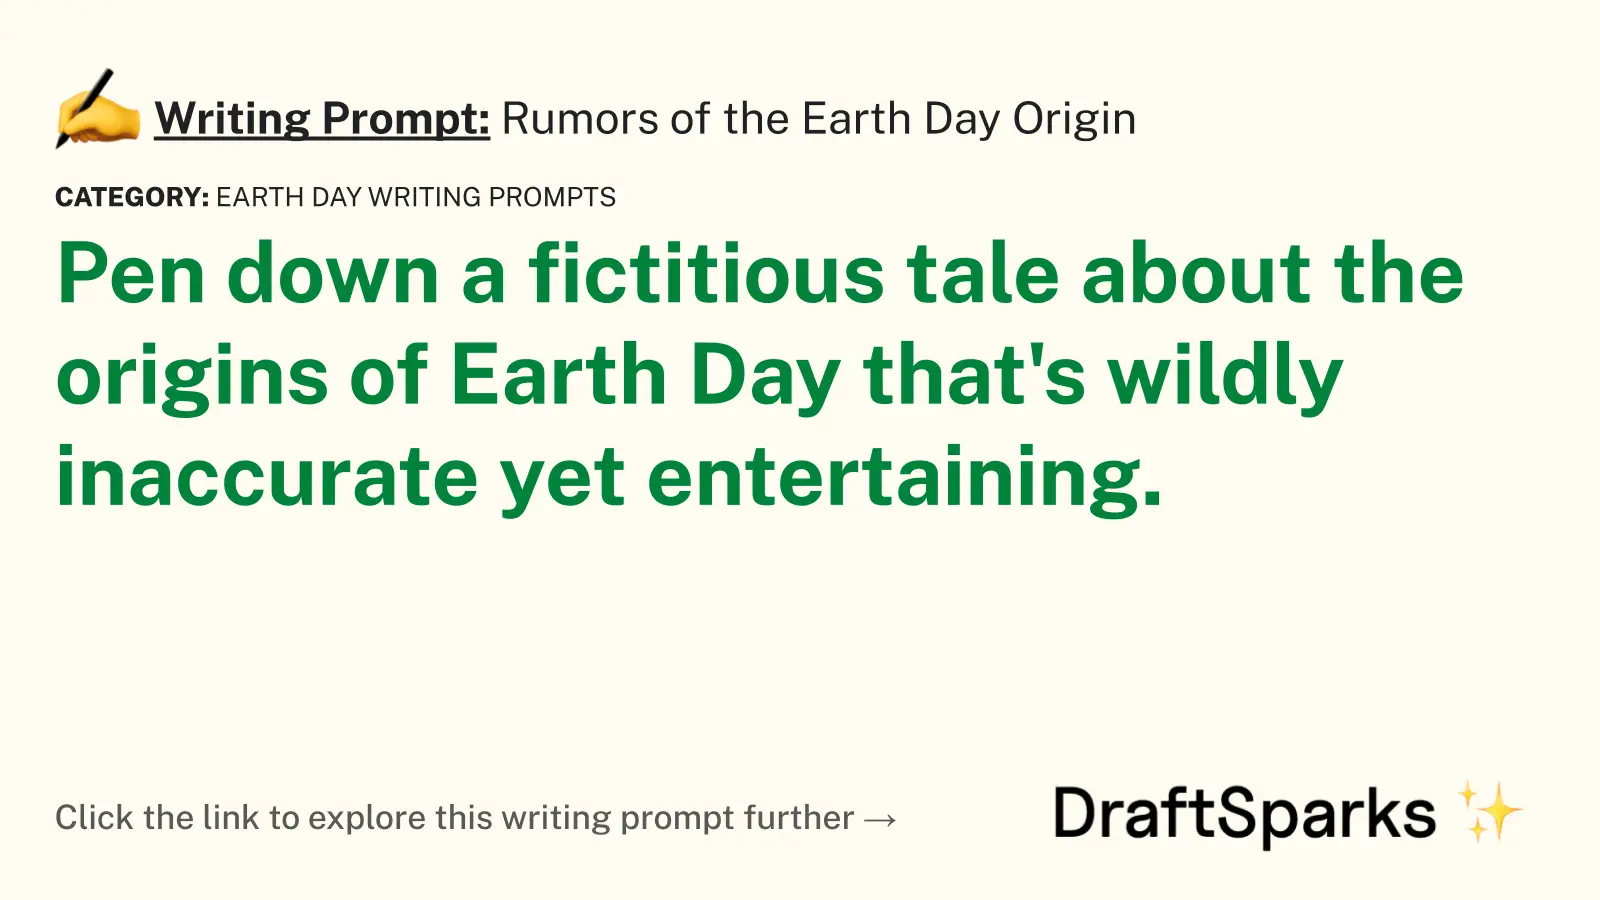 Rumors of the Earth Day Origin